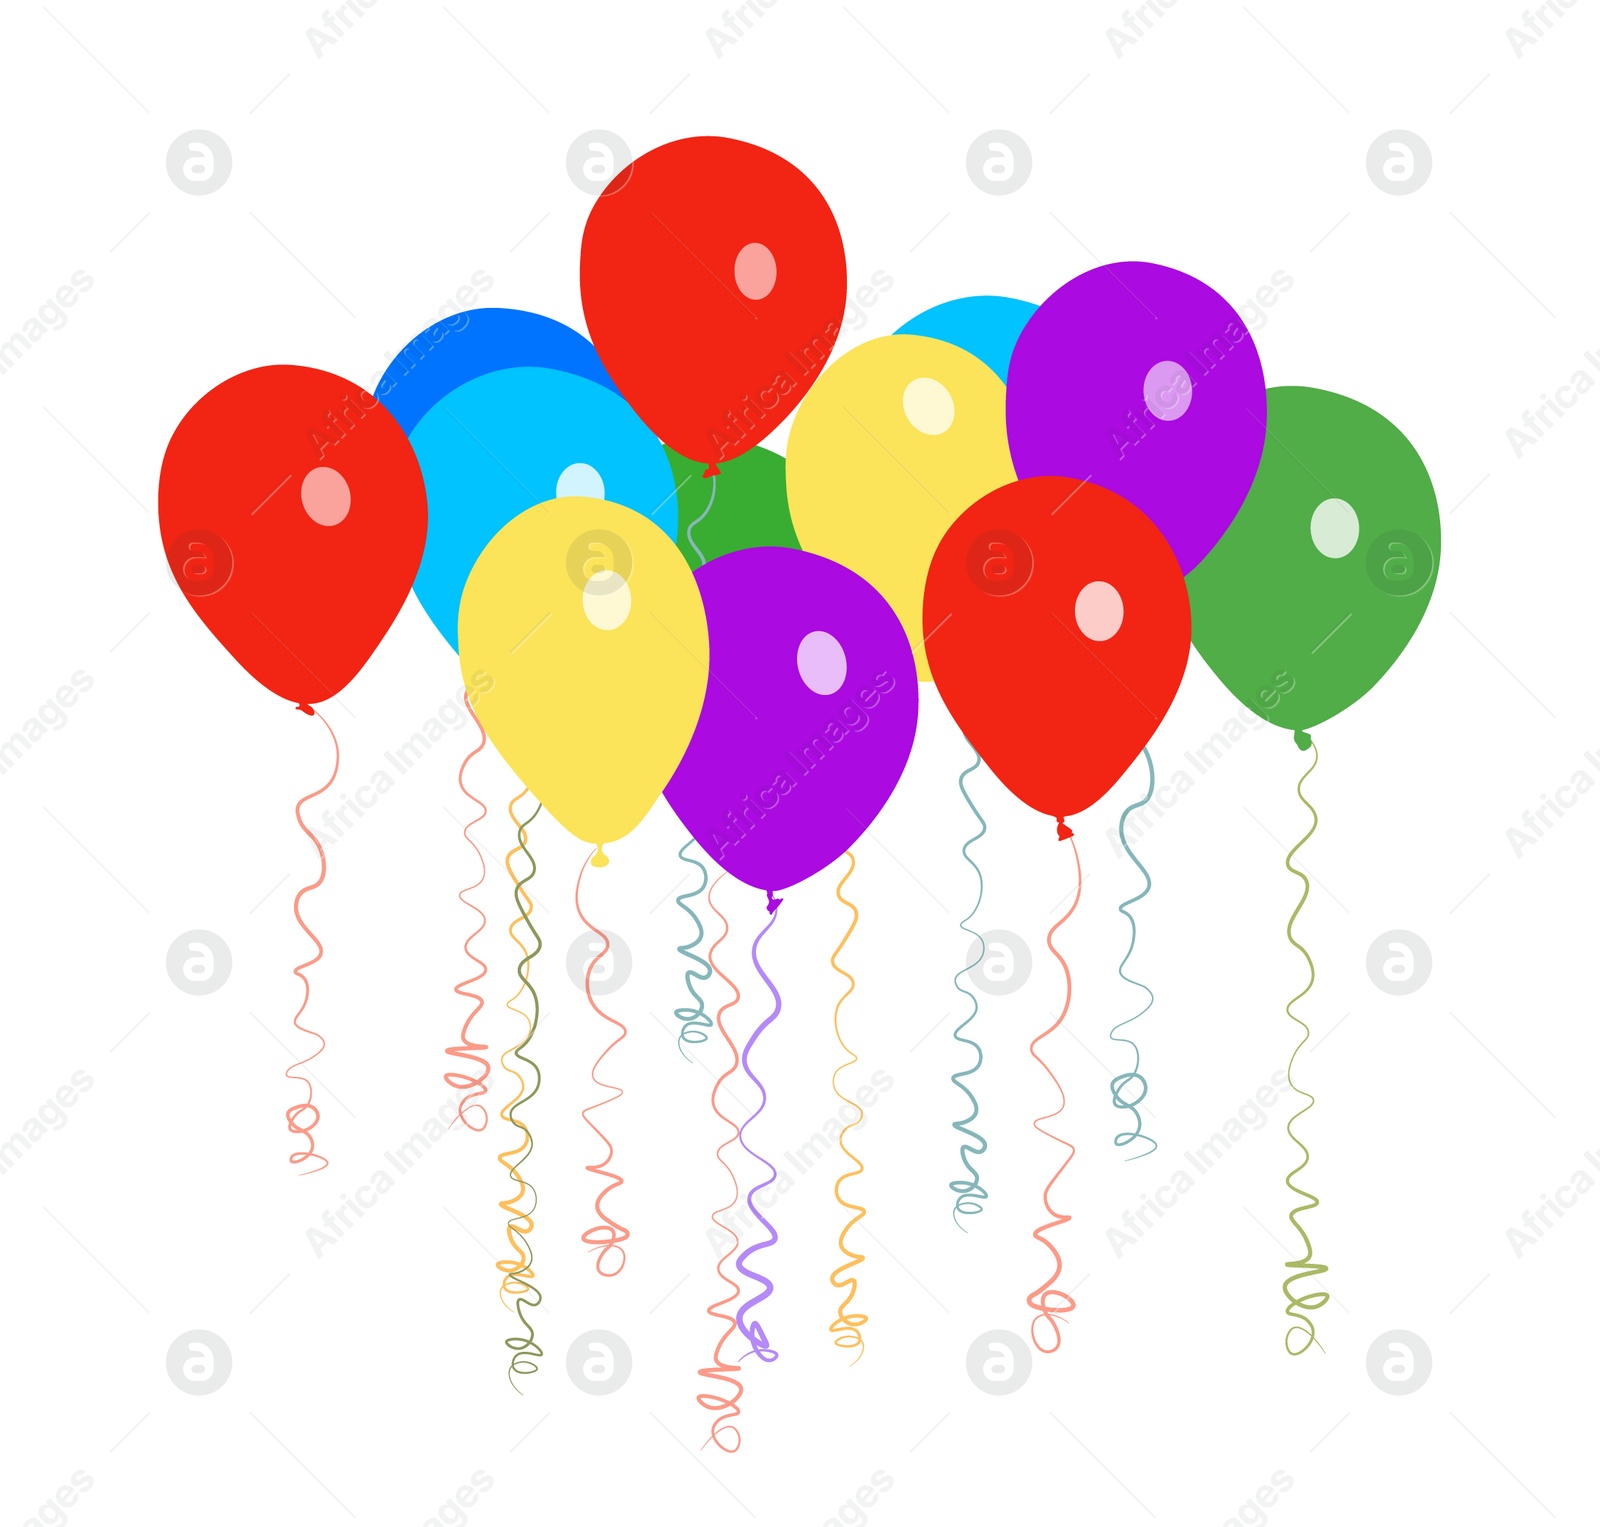 Illustration of Many colorful balloons floating on white background